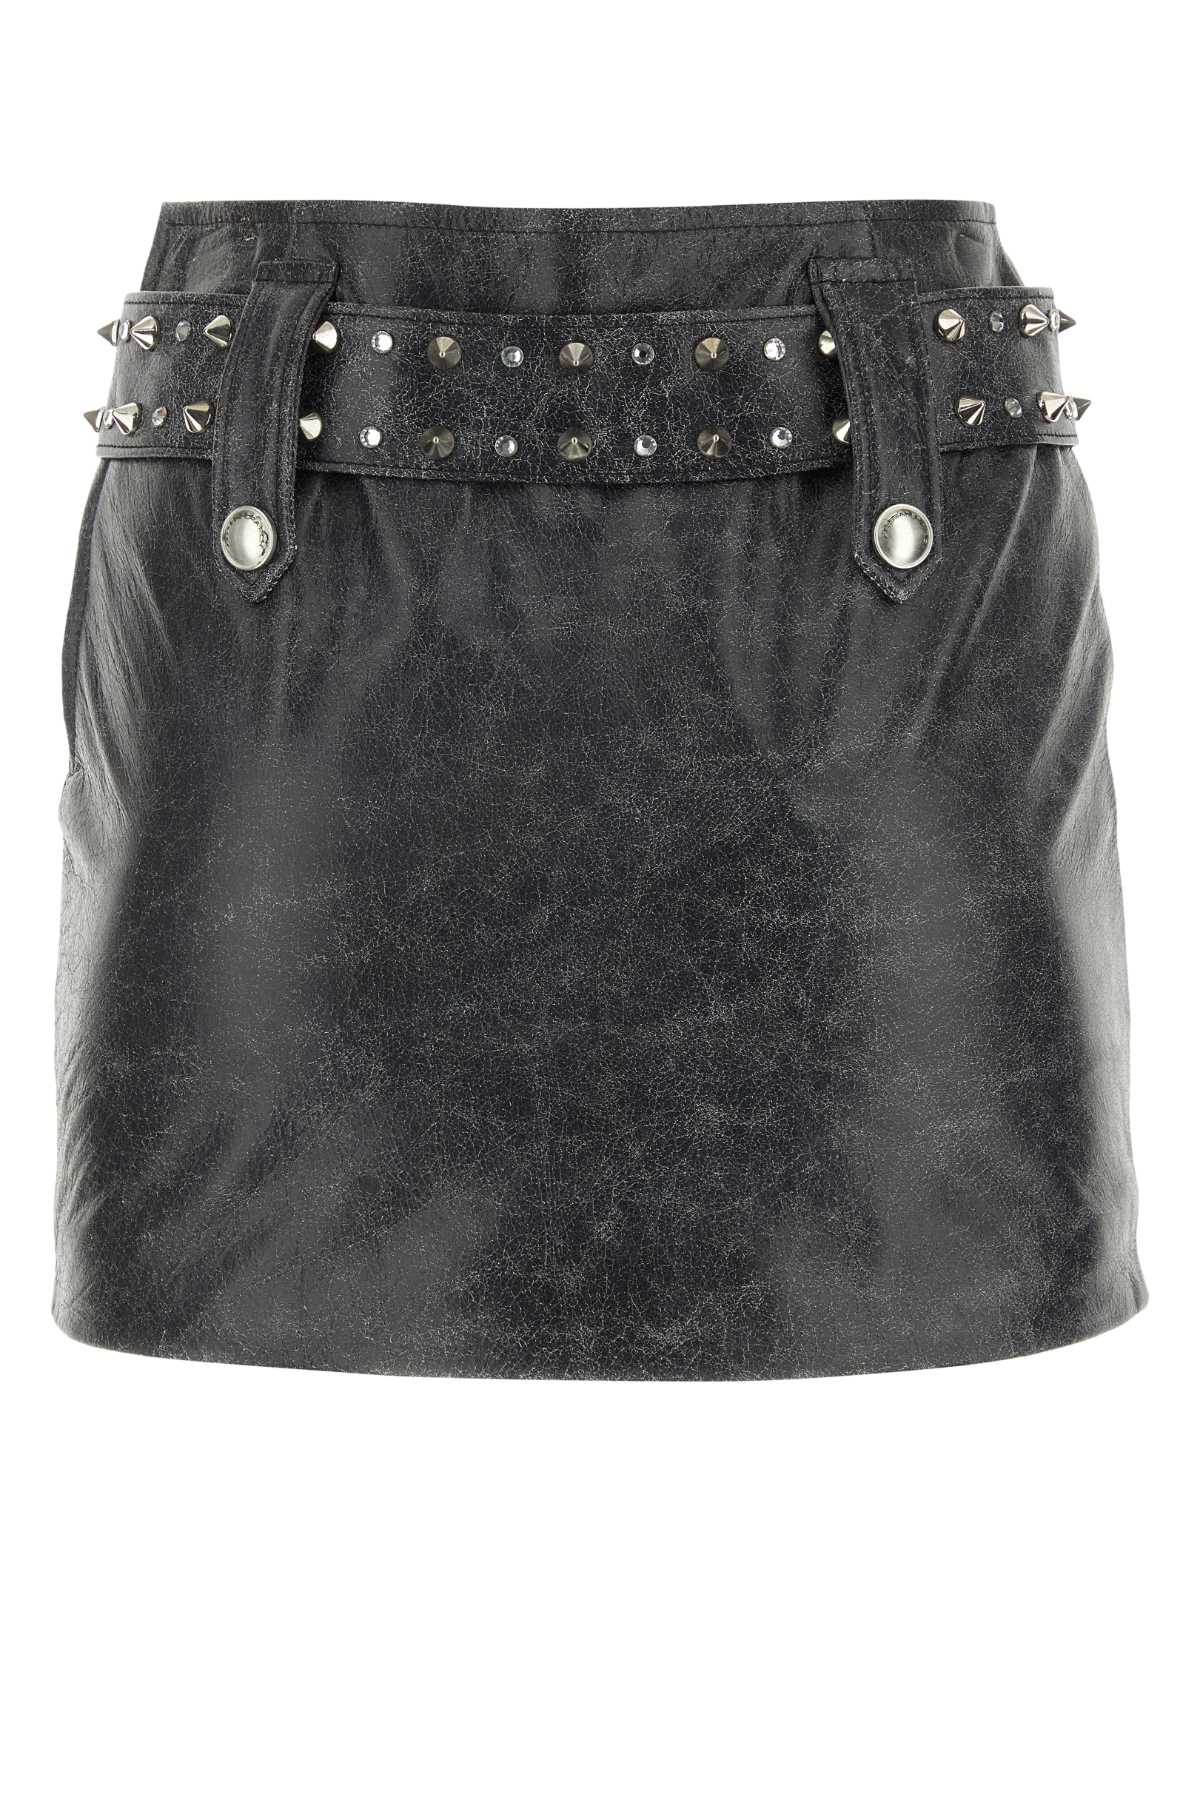 Alessandra Rich Grey Leather Mini Skirt In Darkgrey